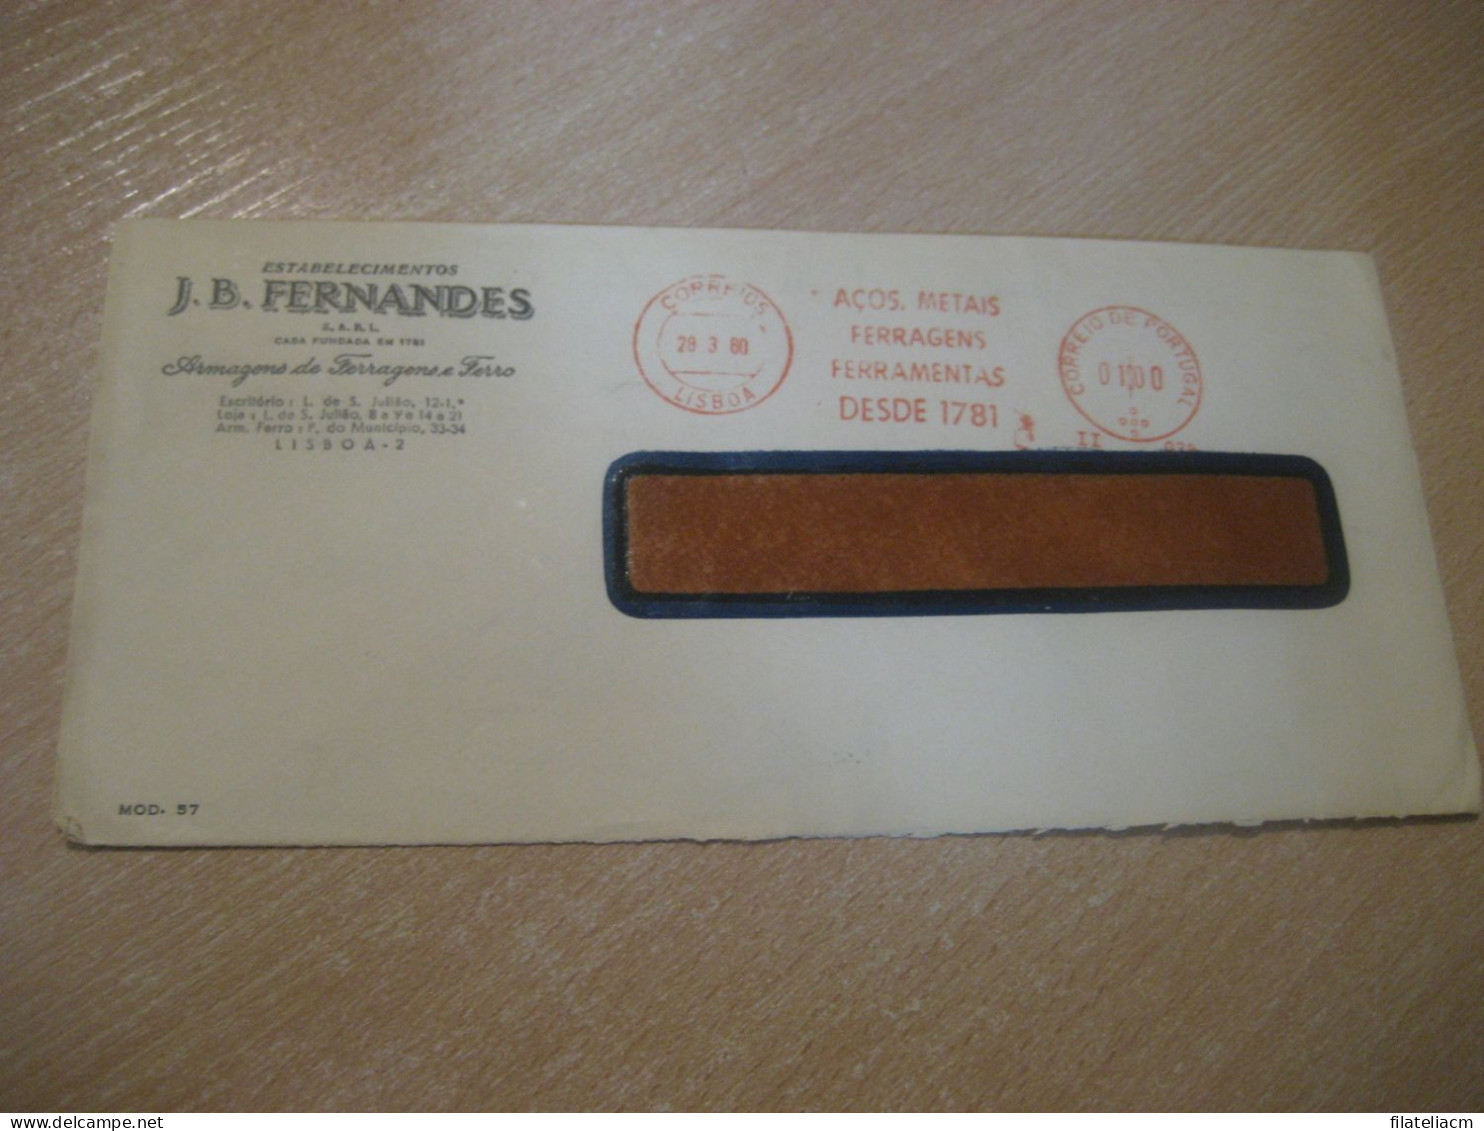 LISBOA 1960 Fernandes Metais Ferragens Ferramentas Meter Mail Cancel SURFORM Cover PORTUGAL - Lettres & Documents